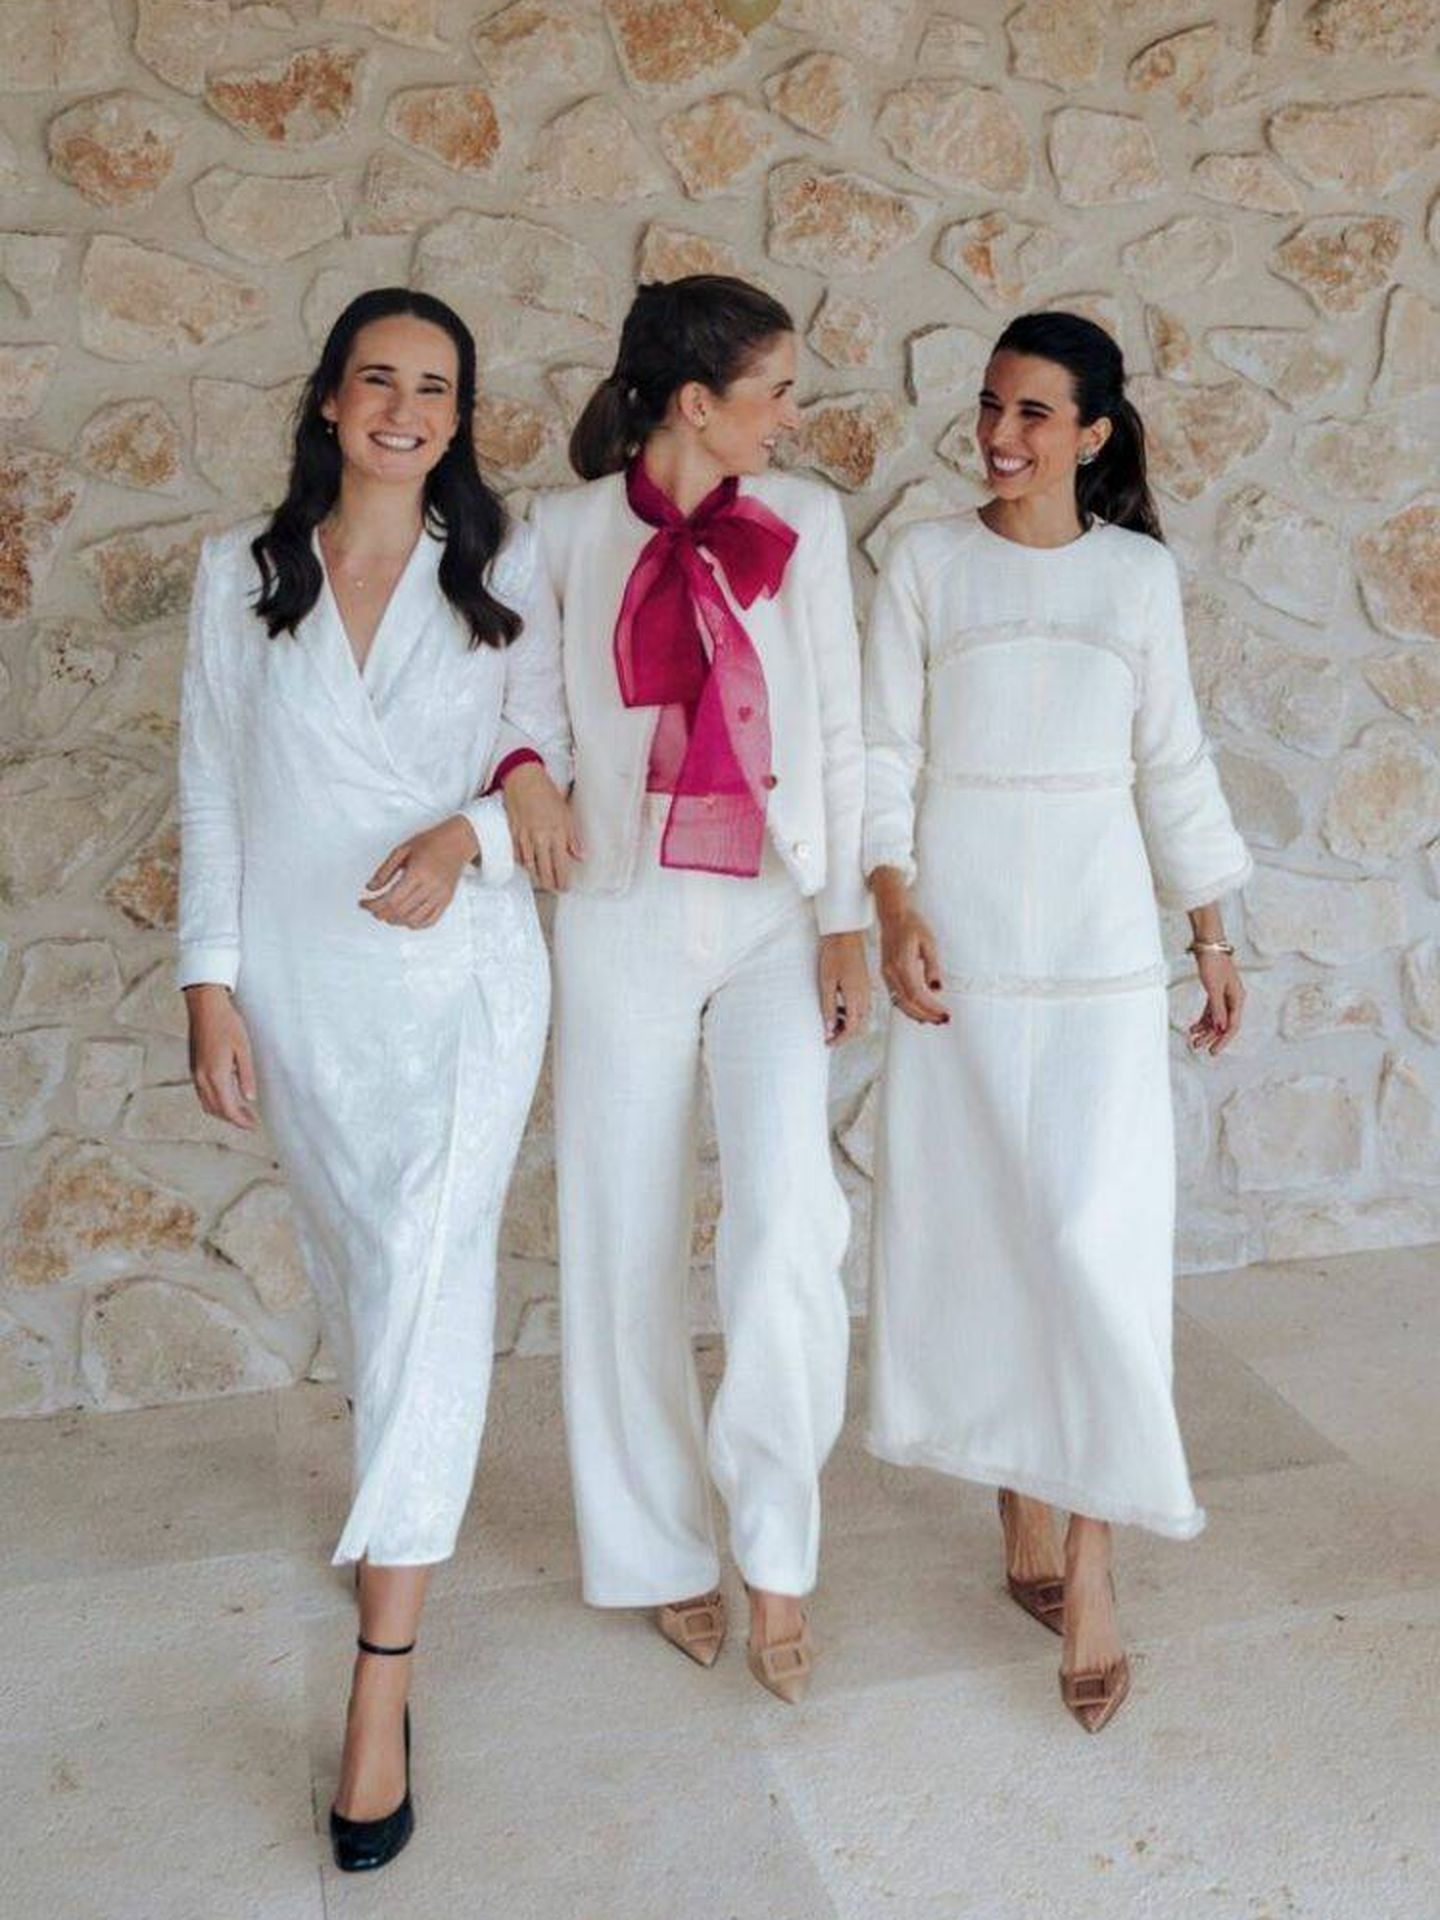 Las hermanas Ana, Alejandra y Laura Corsini celebran juntas el bautizo de sus hijos. (Instagram/@mrslauracorsini)